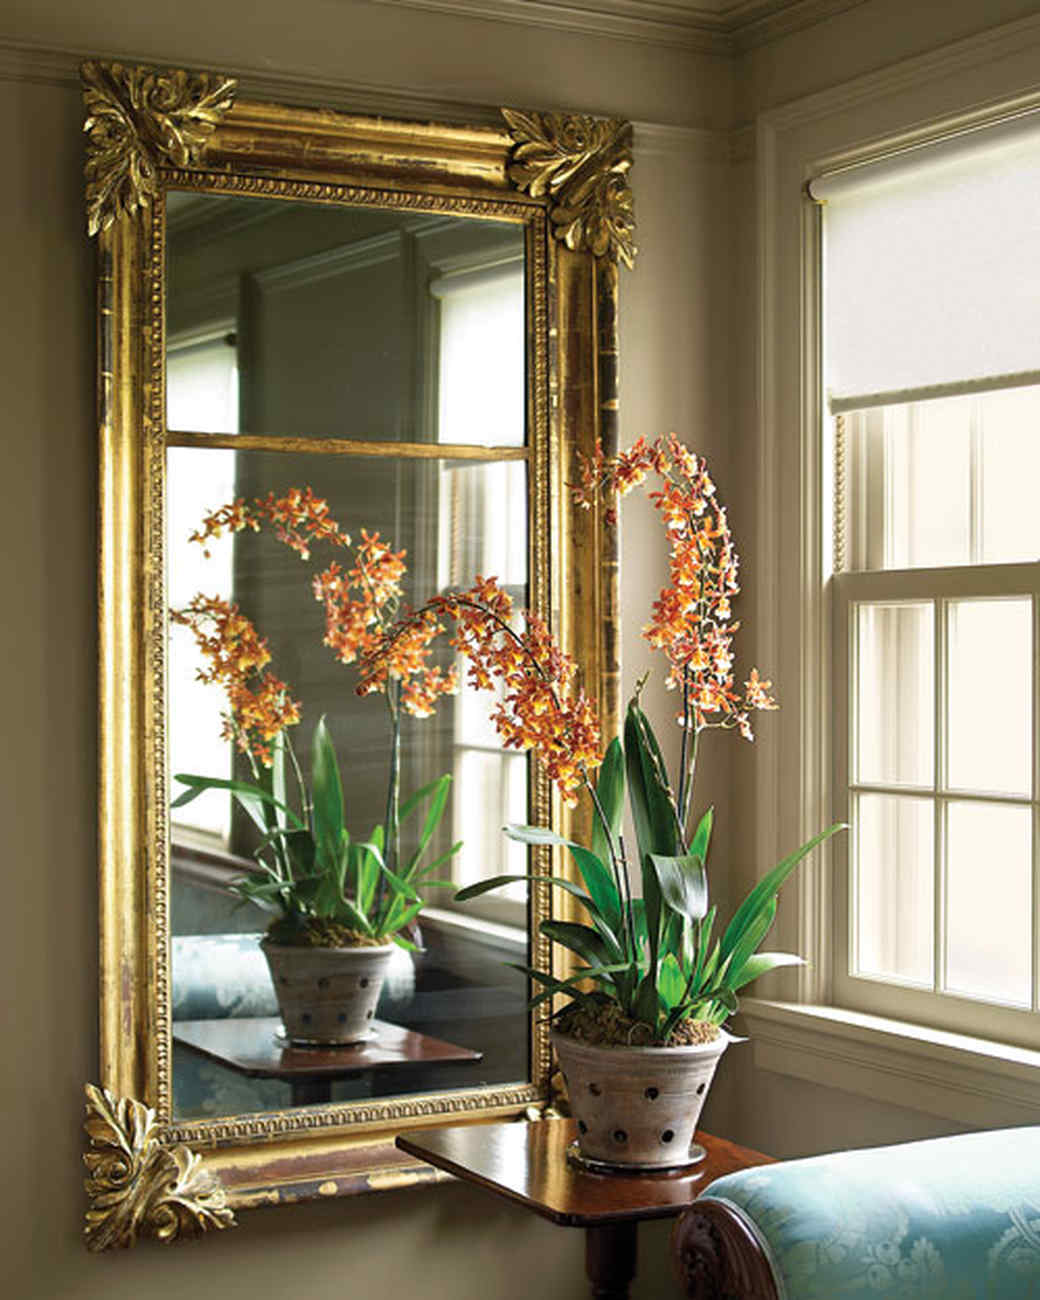 Martha s Home Decorating with Houseplants Martha Stewart